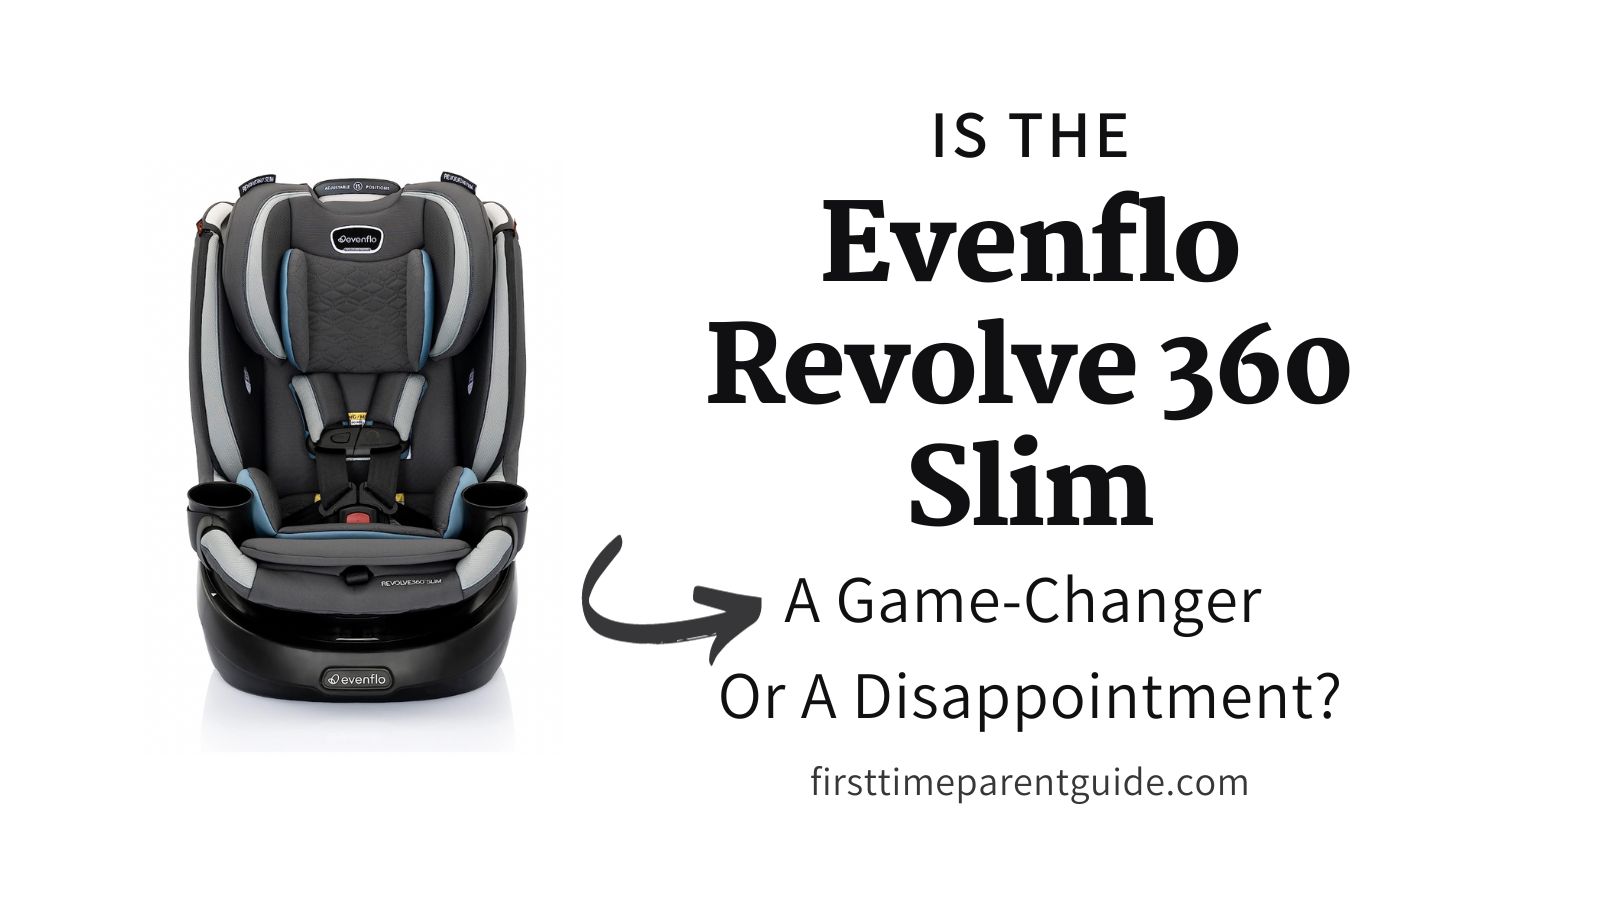 the Evenflo Revolve 360 Slim